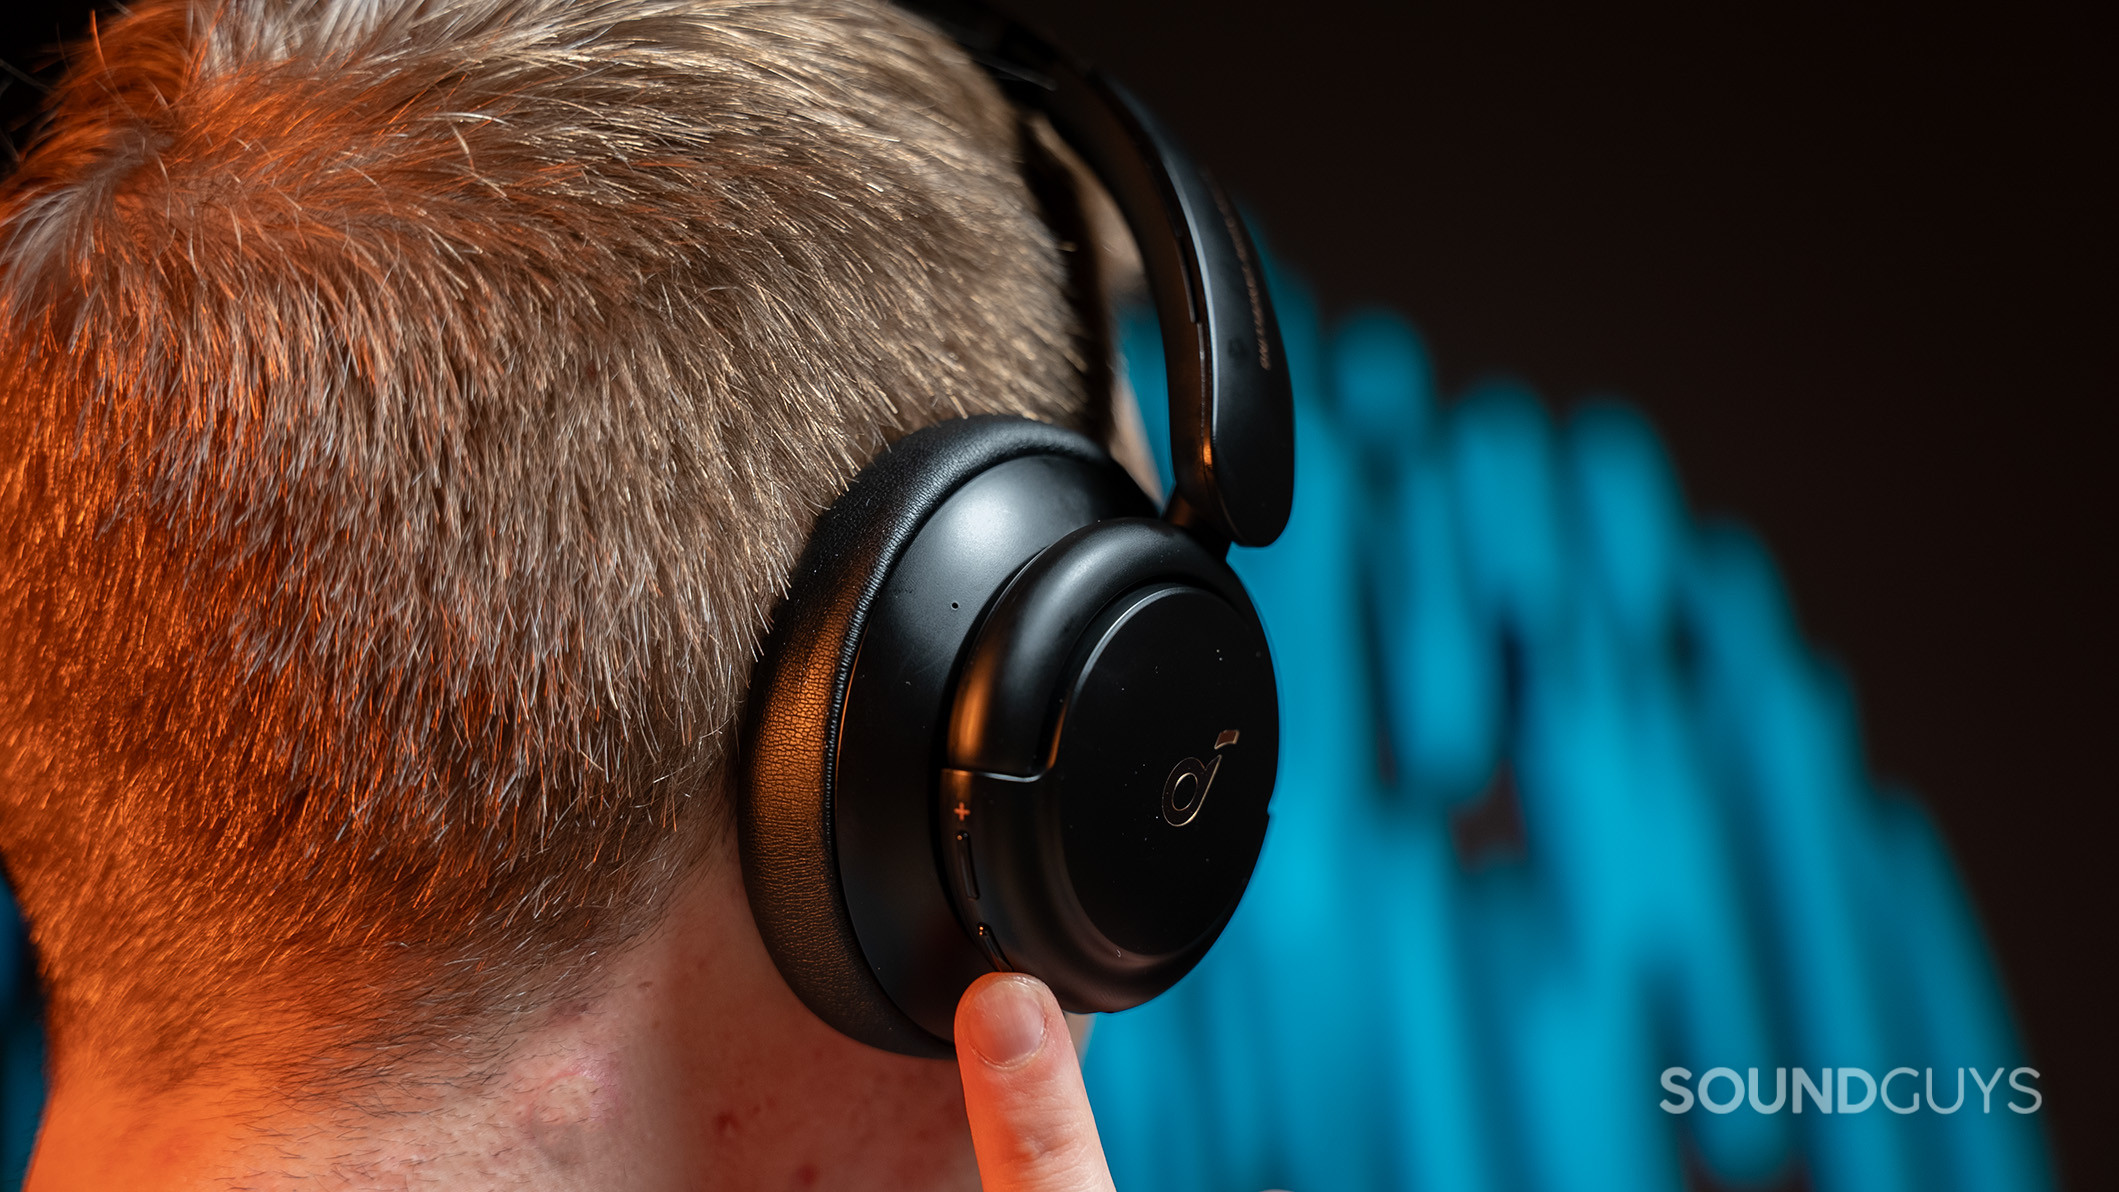 Soundcore Life Q30 Wireless ANC Headphones REVIEW - MacSources